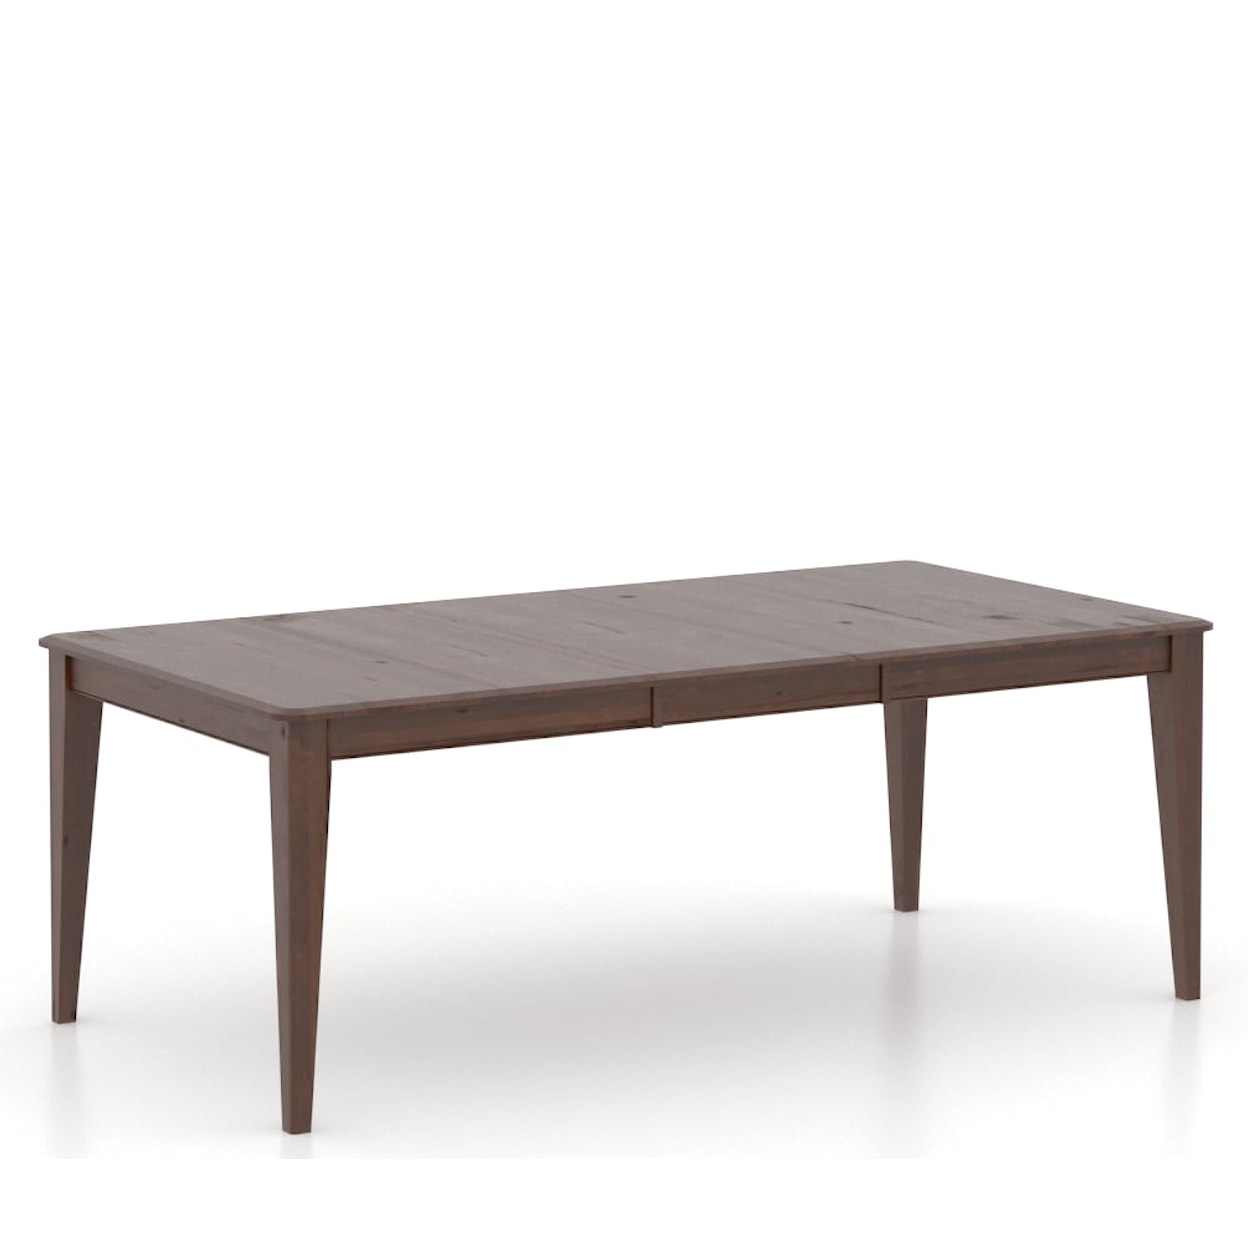 Canadel Gourmet Customizable Rectangular Wood Table